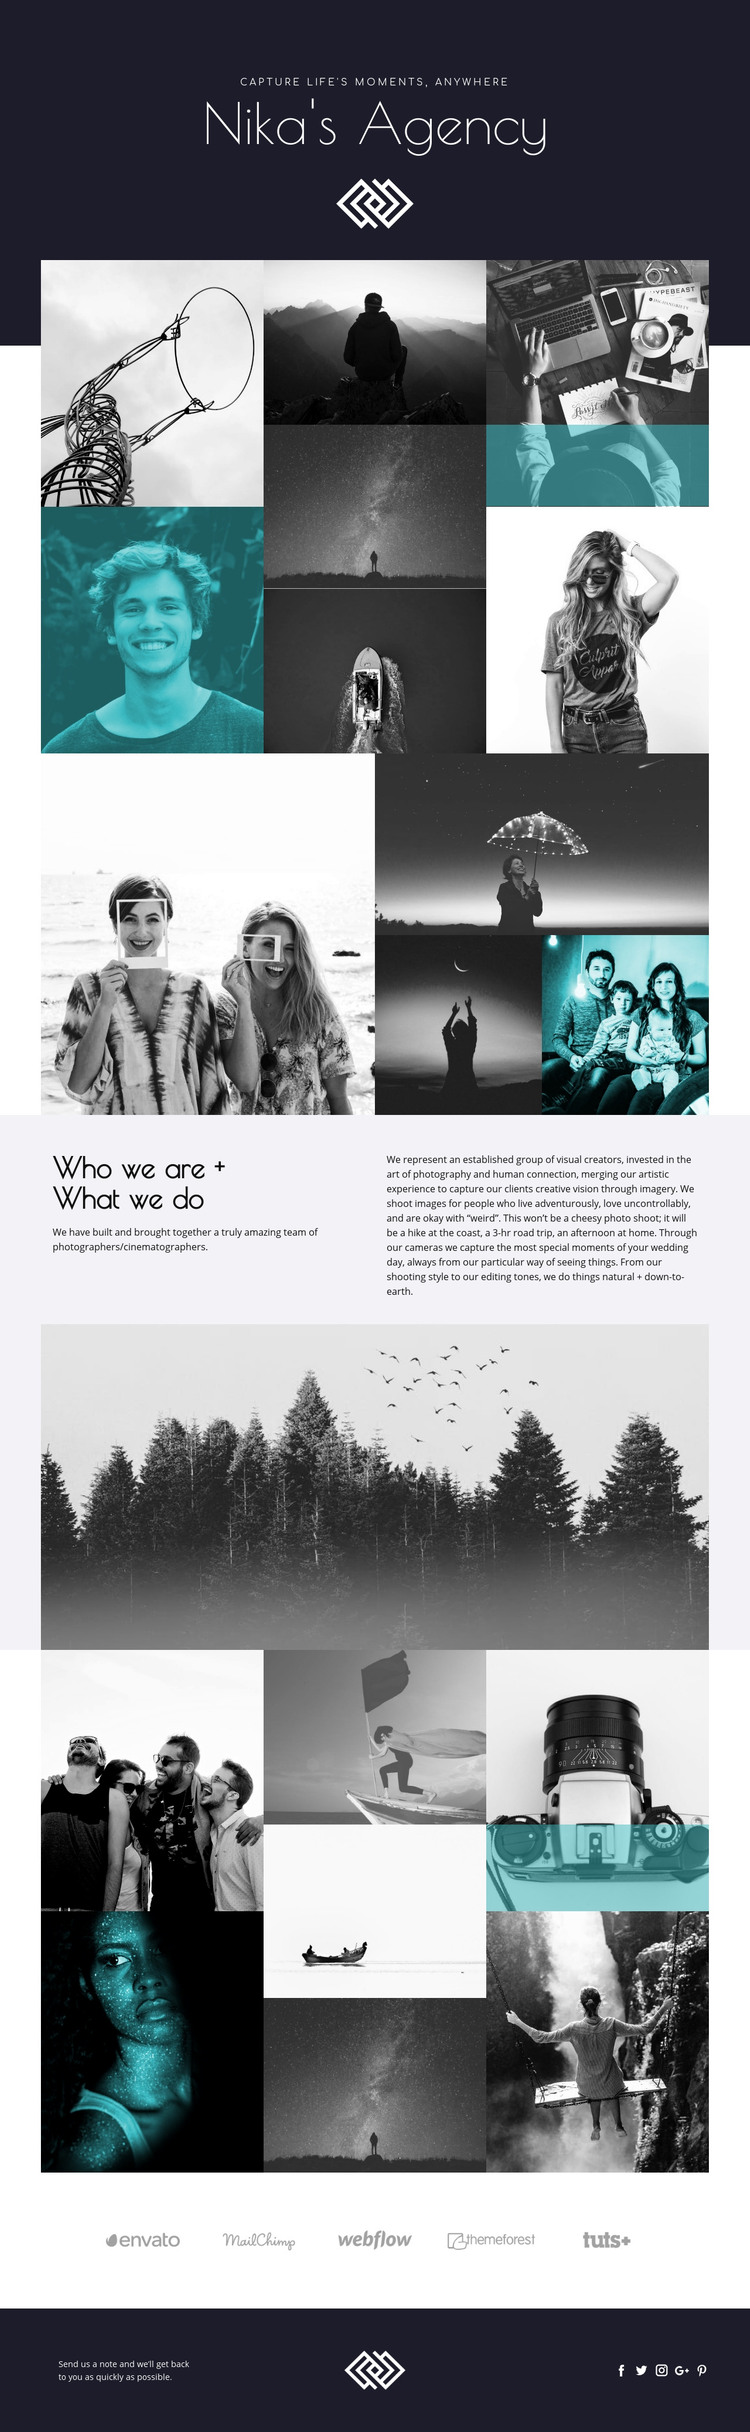 Nika's Agency Homepage Design